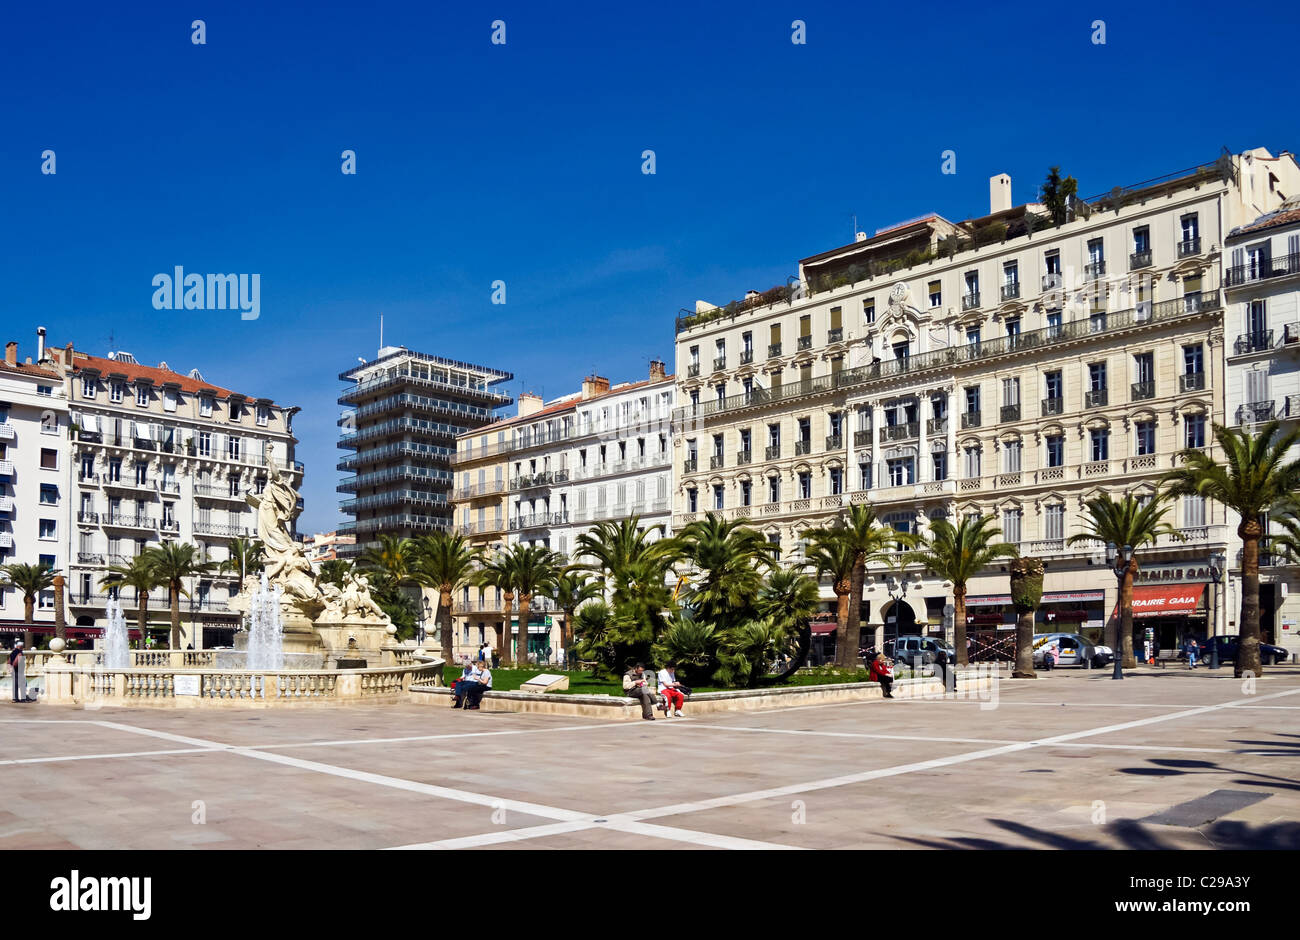 Grand Hotel De La Gare (rechts) in Place De La Liberte im Zentrum von Toulon Frankreich Stockfoto